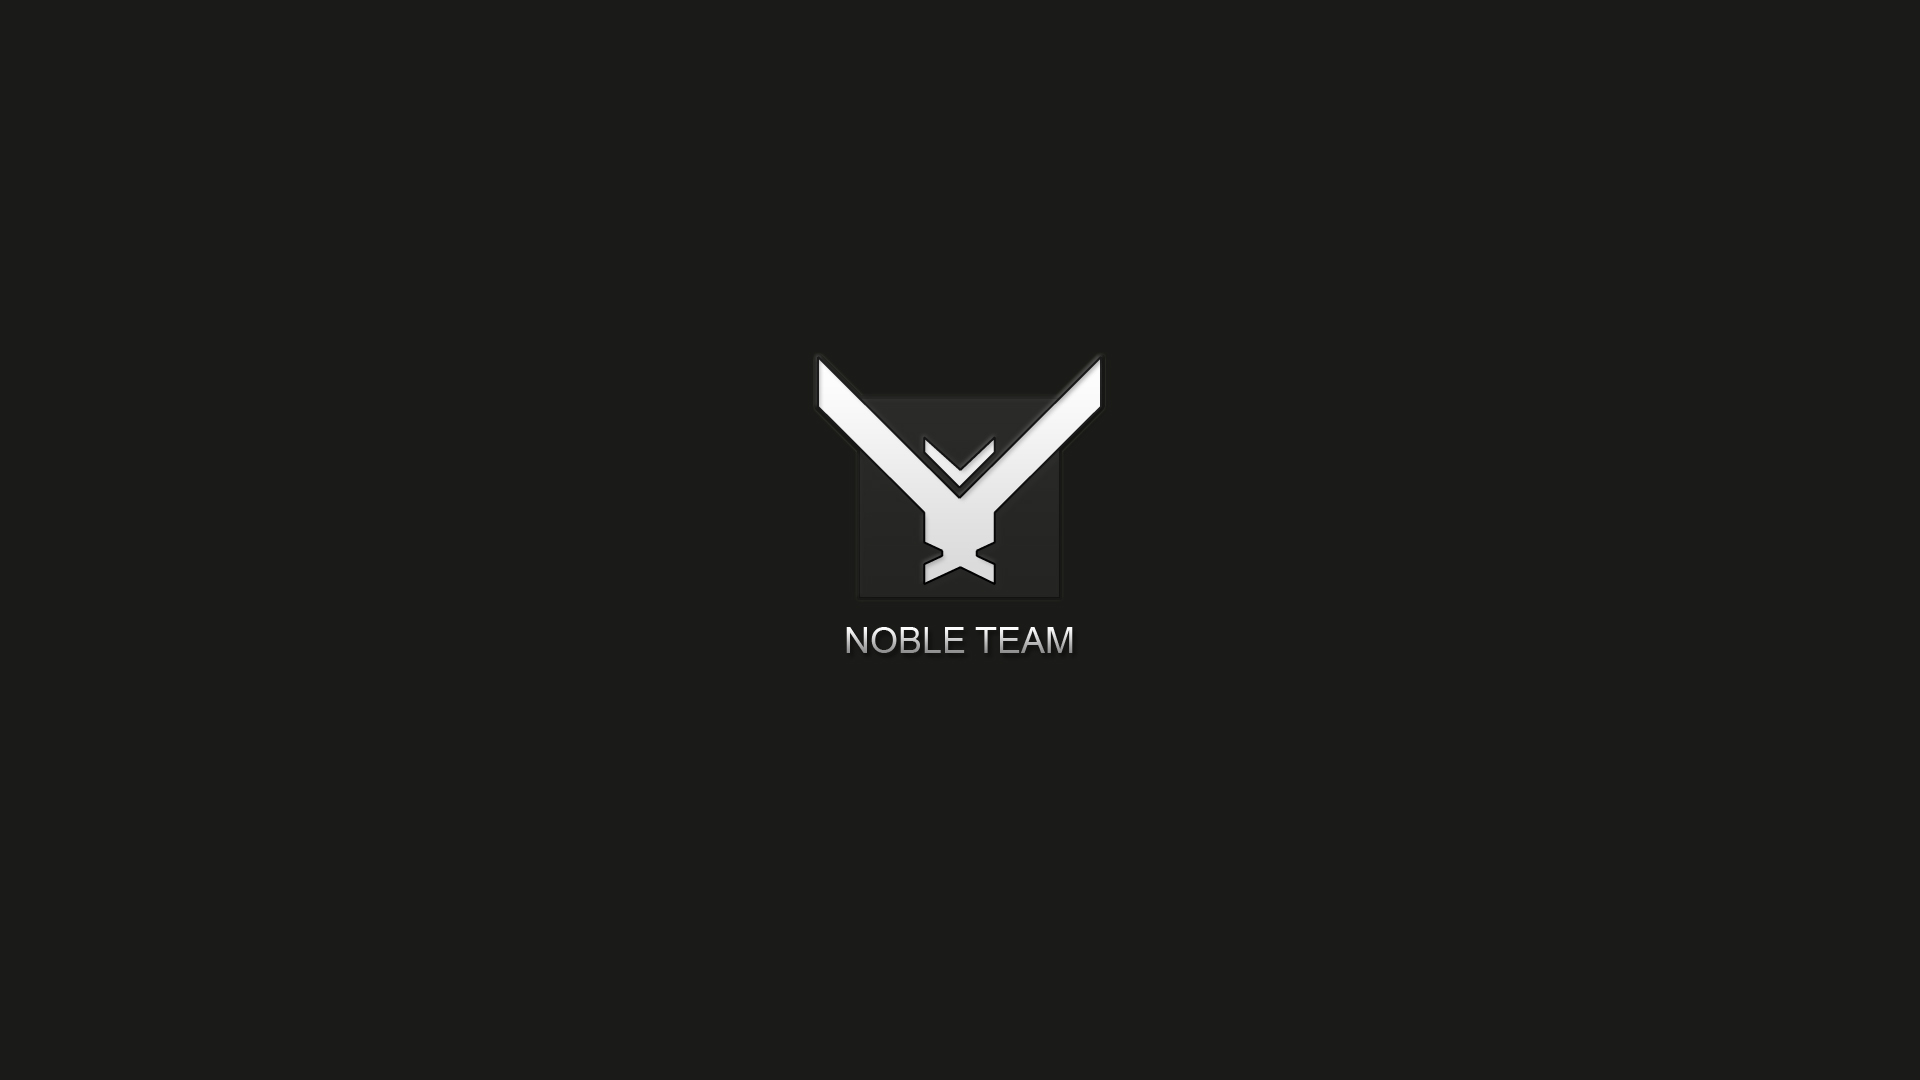 Reach : Noble Team Symbol by Zystoli on Deviant. zystoli.deviantart.com. he...